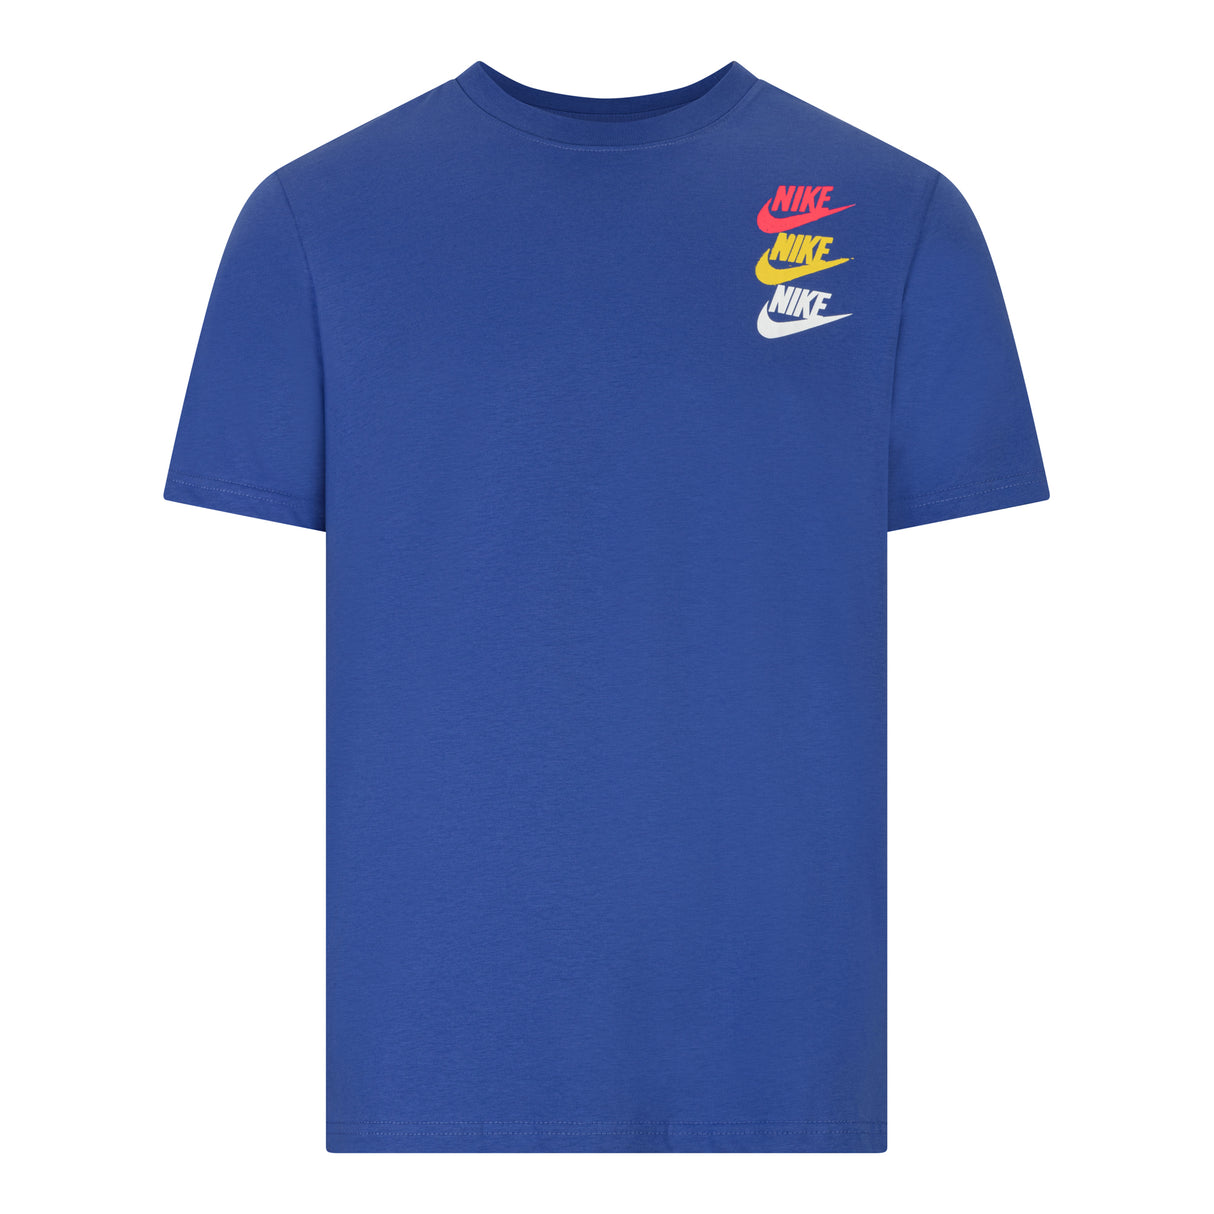 Nike Sportswear Men’s Standard Issue T-Shirt in Game Royal